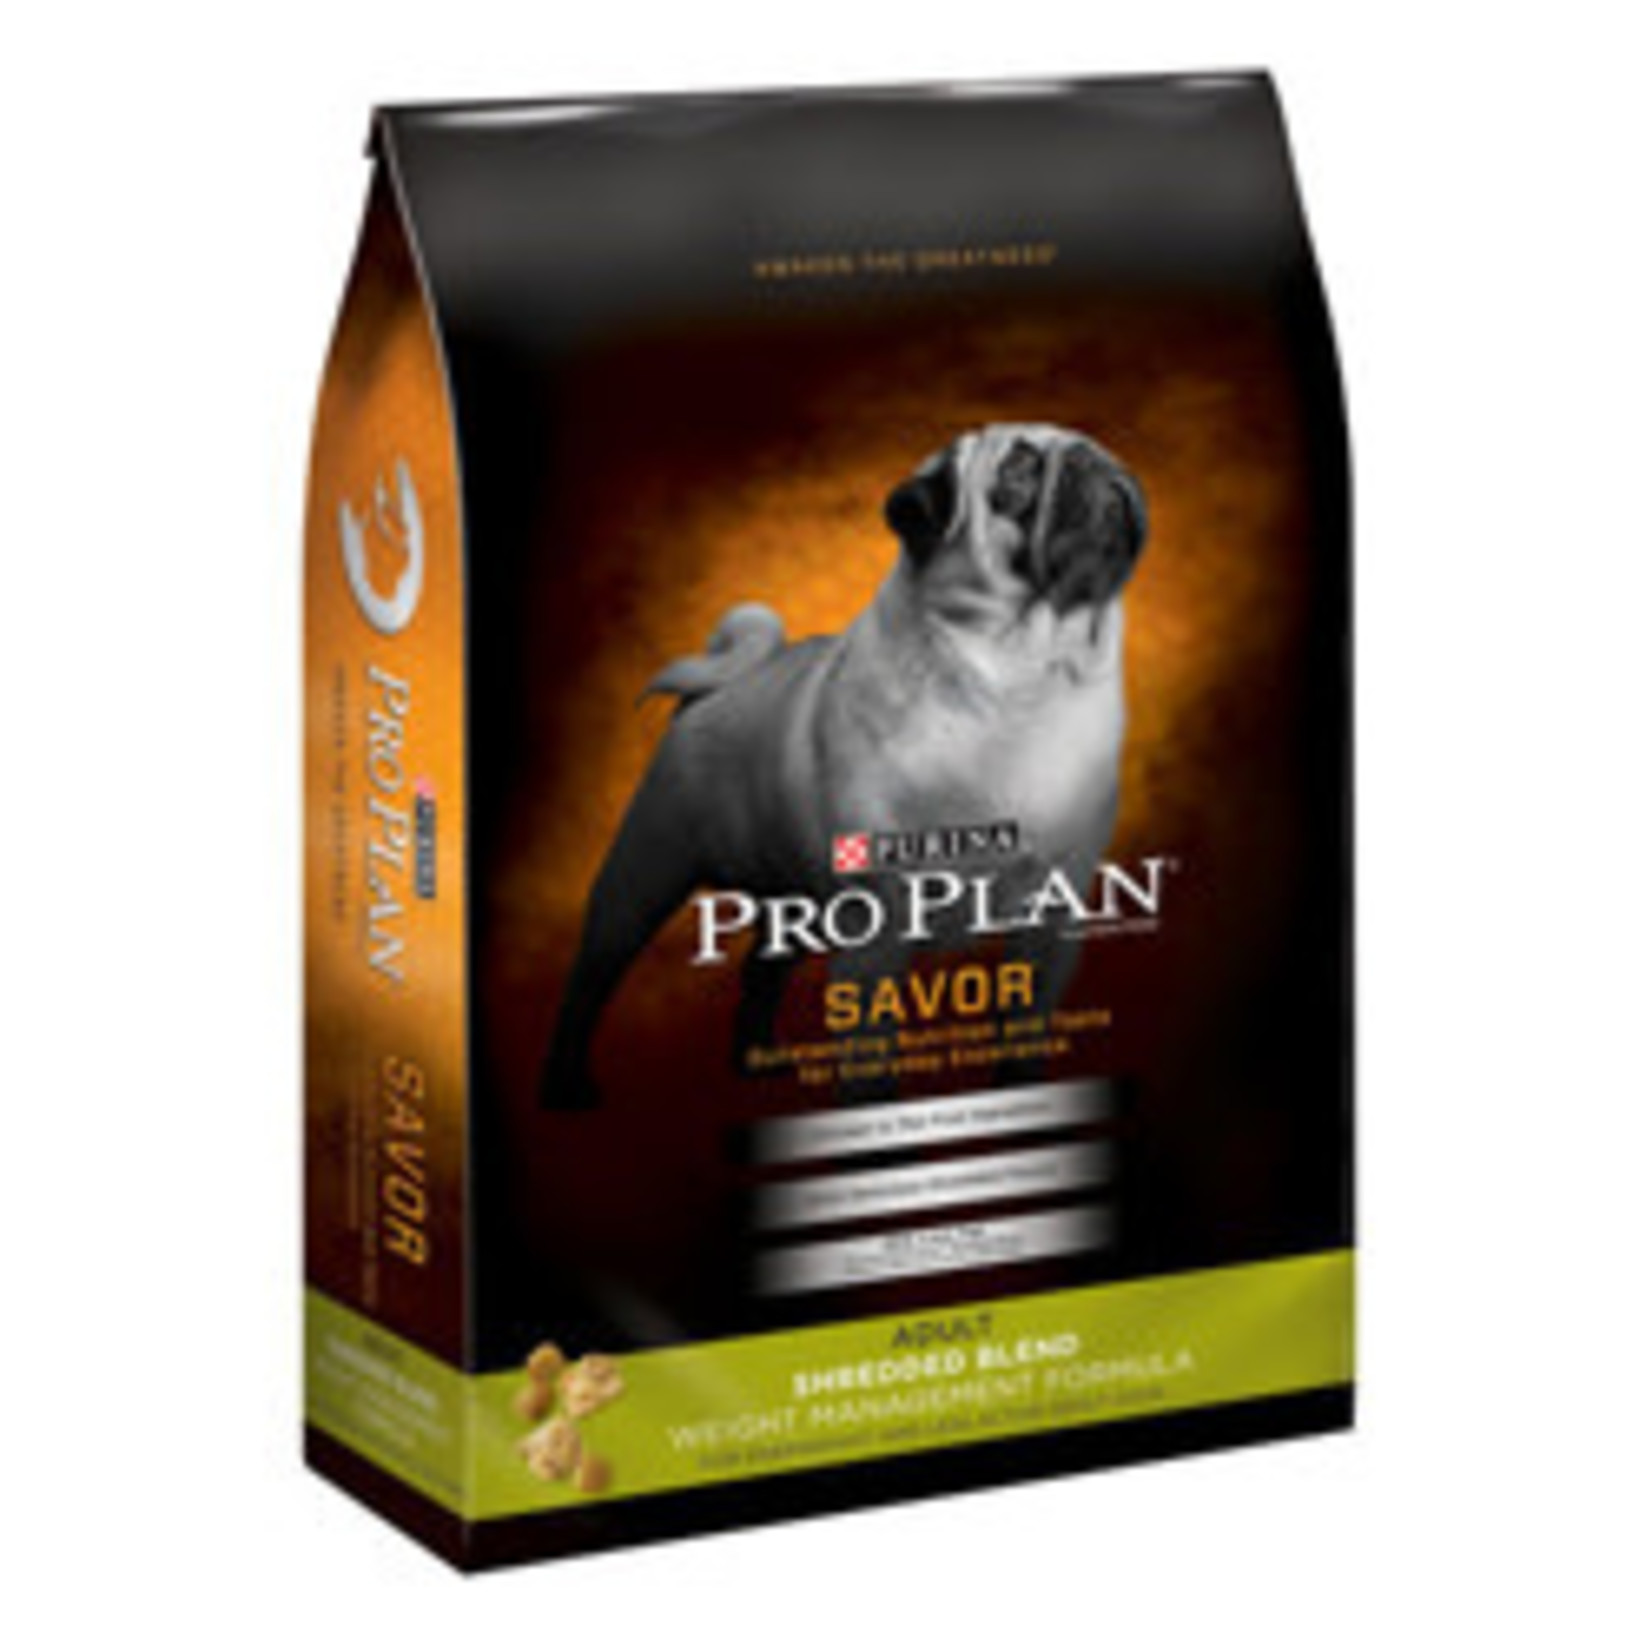 Pro Plan Savor Shredded Blend Weight Management Dog 6# Pro Plan